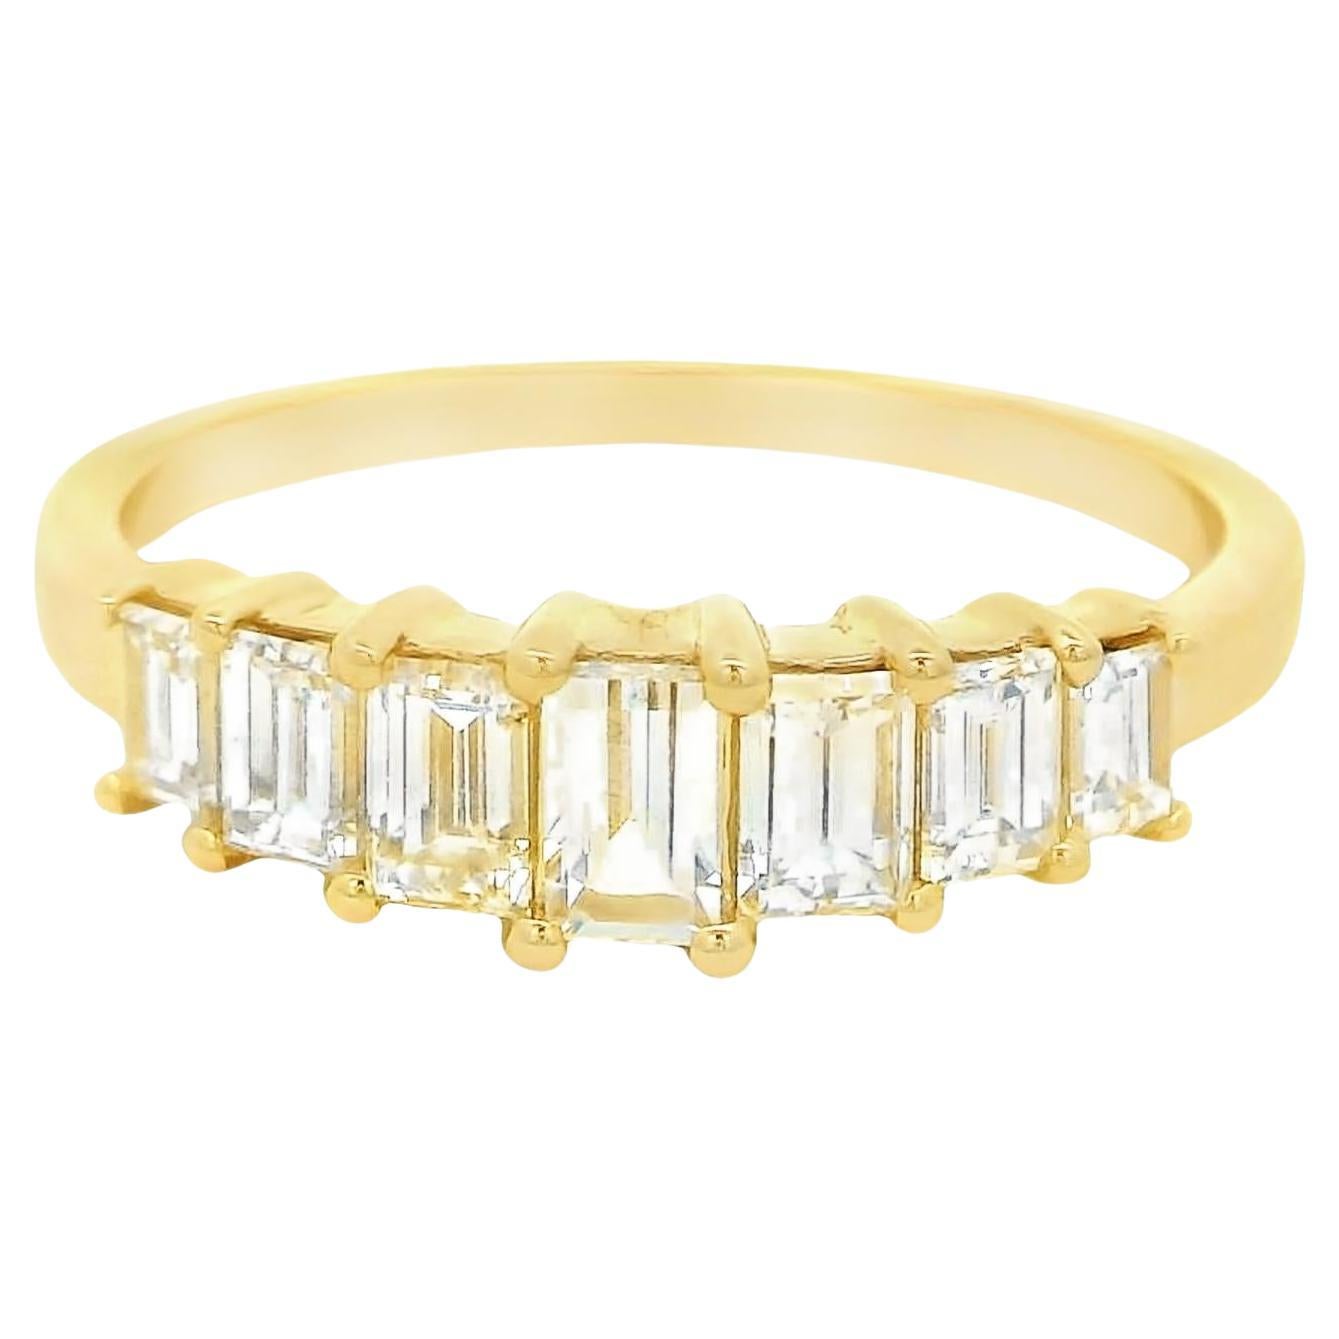 14 Karat Gelbgold Baguette-Ring mit Diamanten